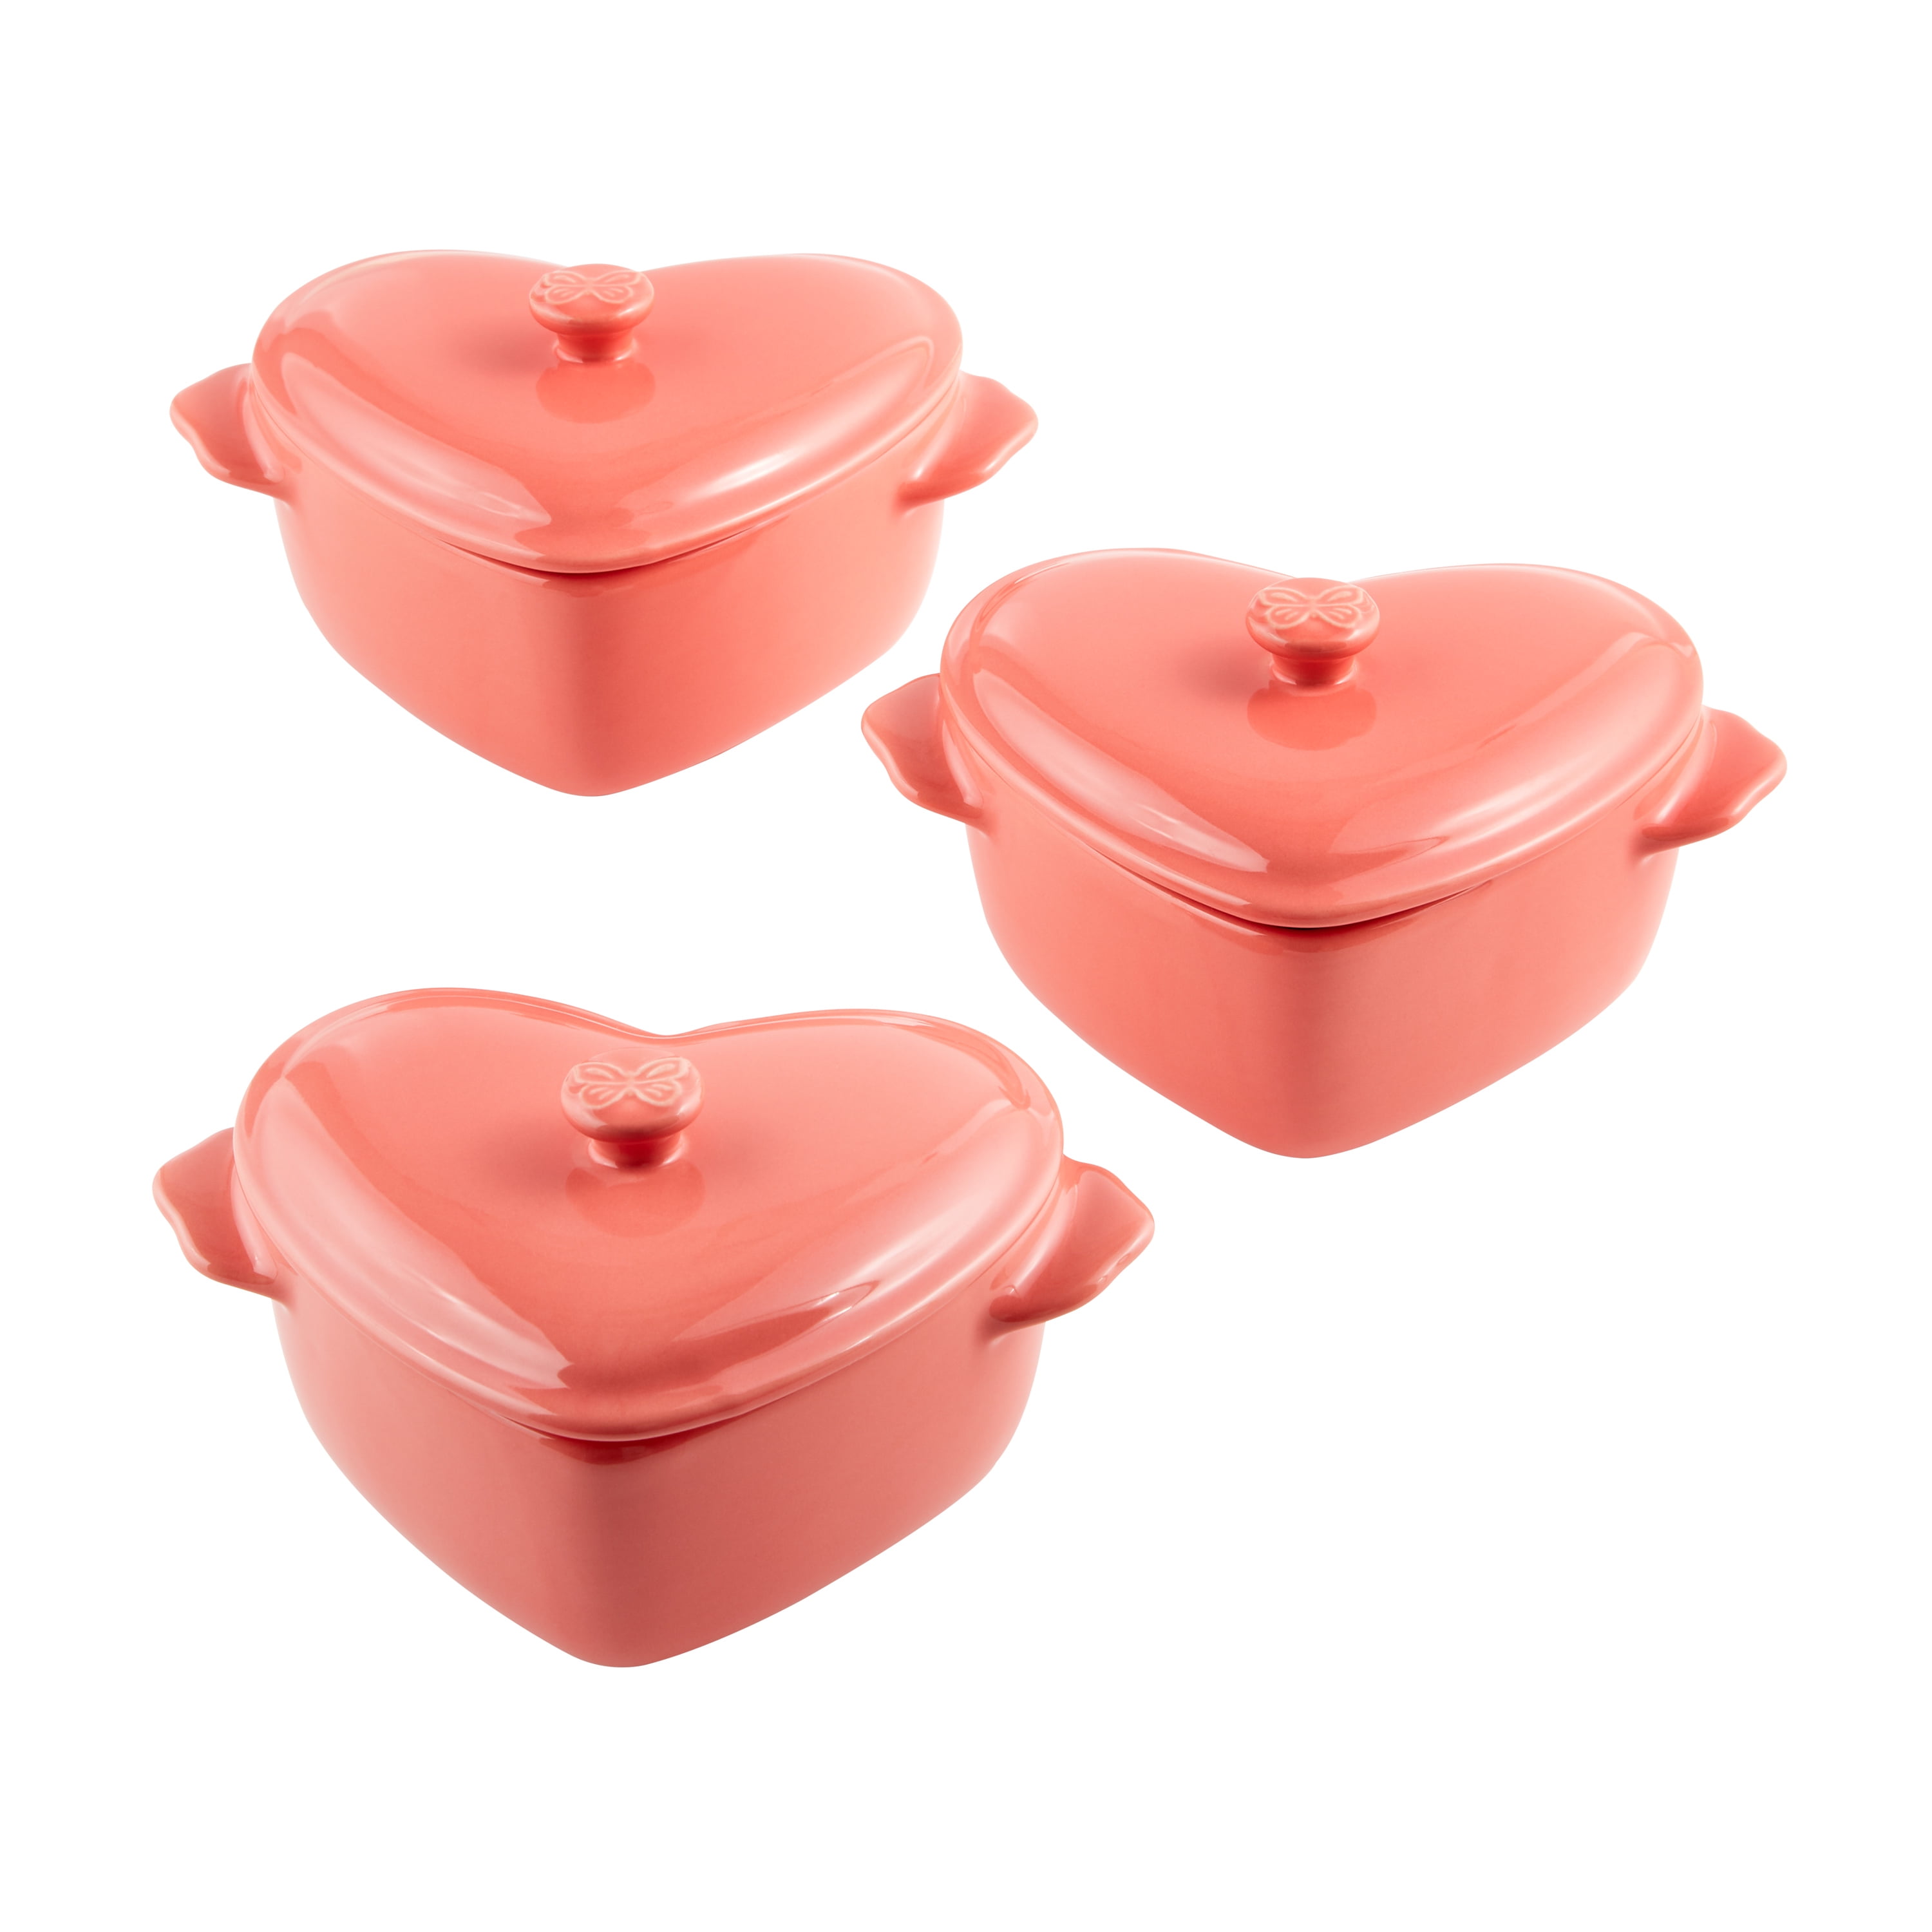 10-PCS Ceramic Nonstick Cast Aluminum Cookware Set Heart Shaped Lid Knobs  Pink